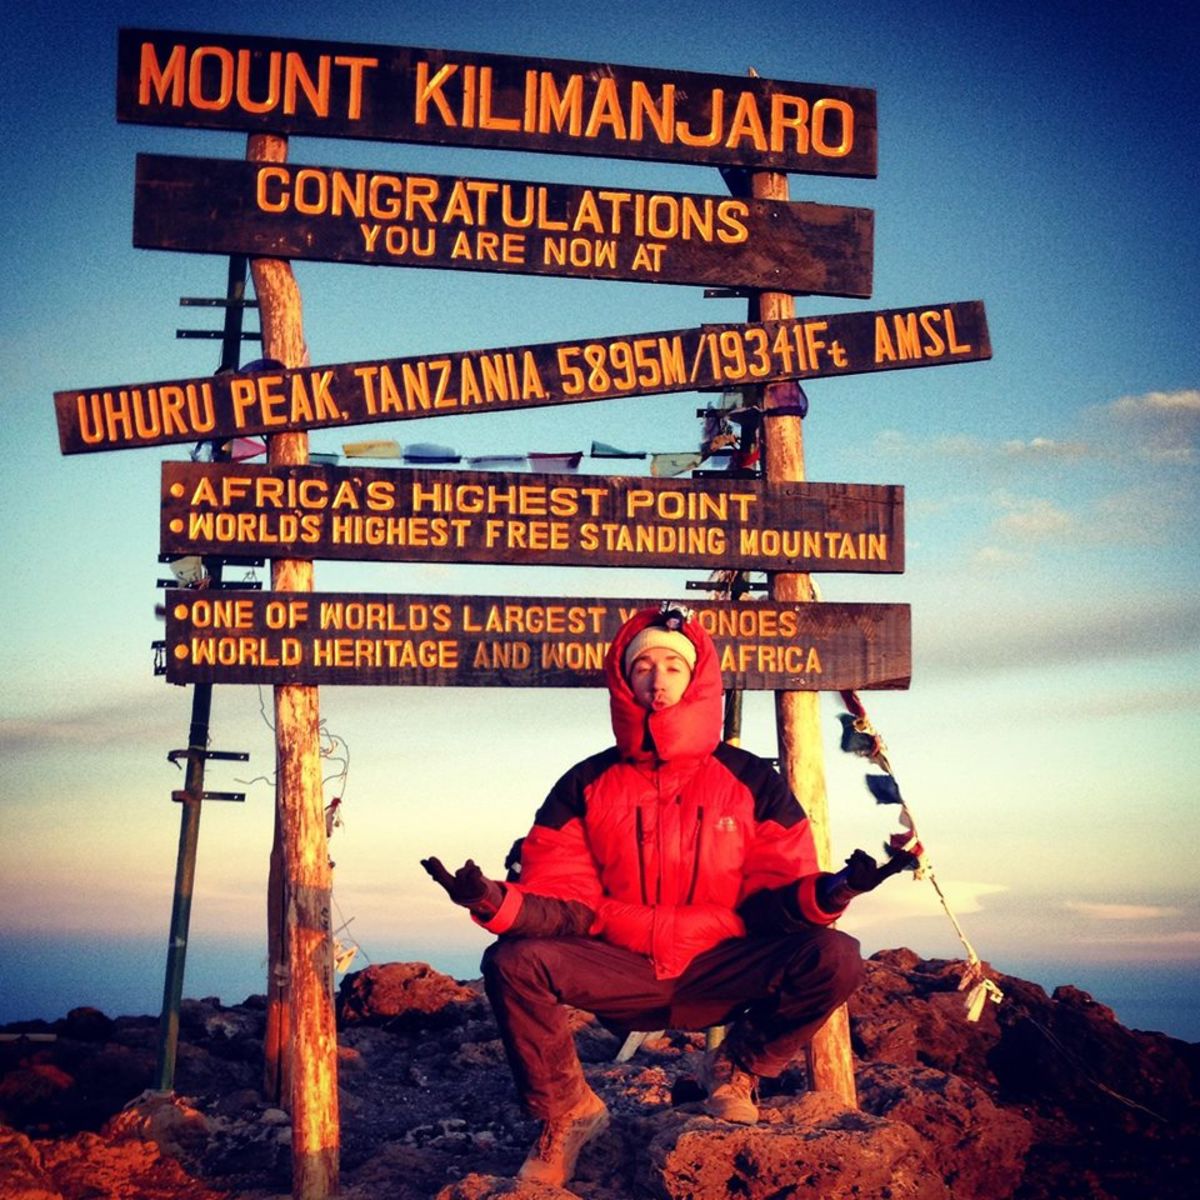 Reto i a zen pose in front of the Uhuru Peak sign on Mt Kilimanjaro